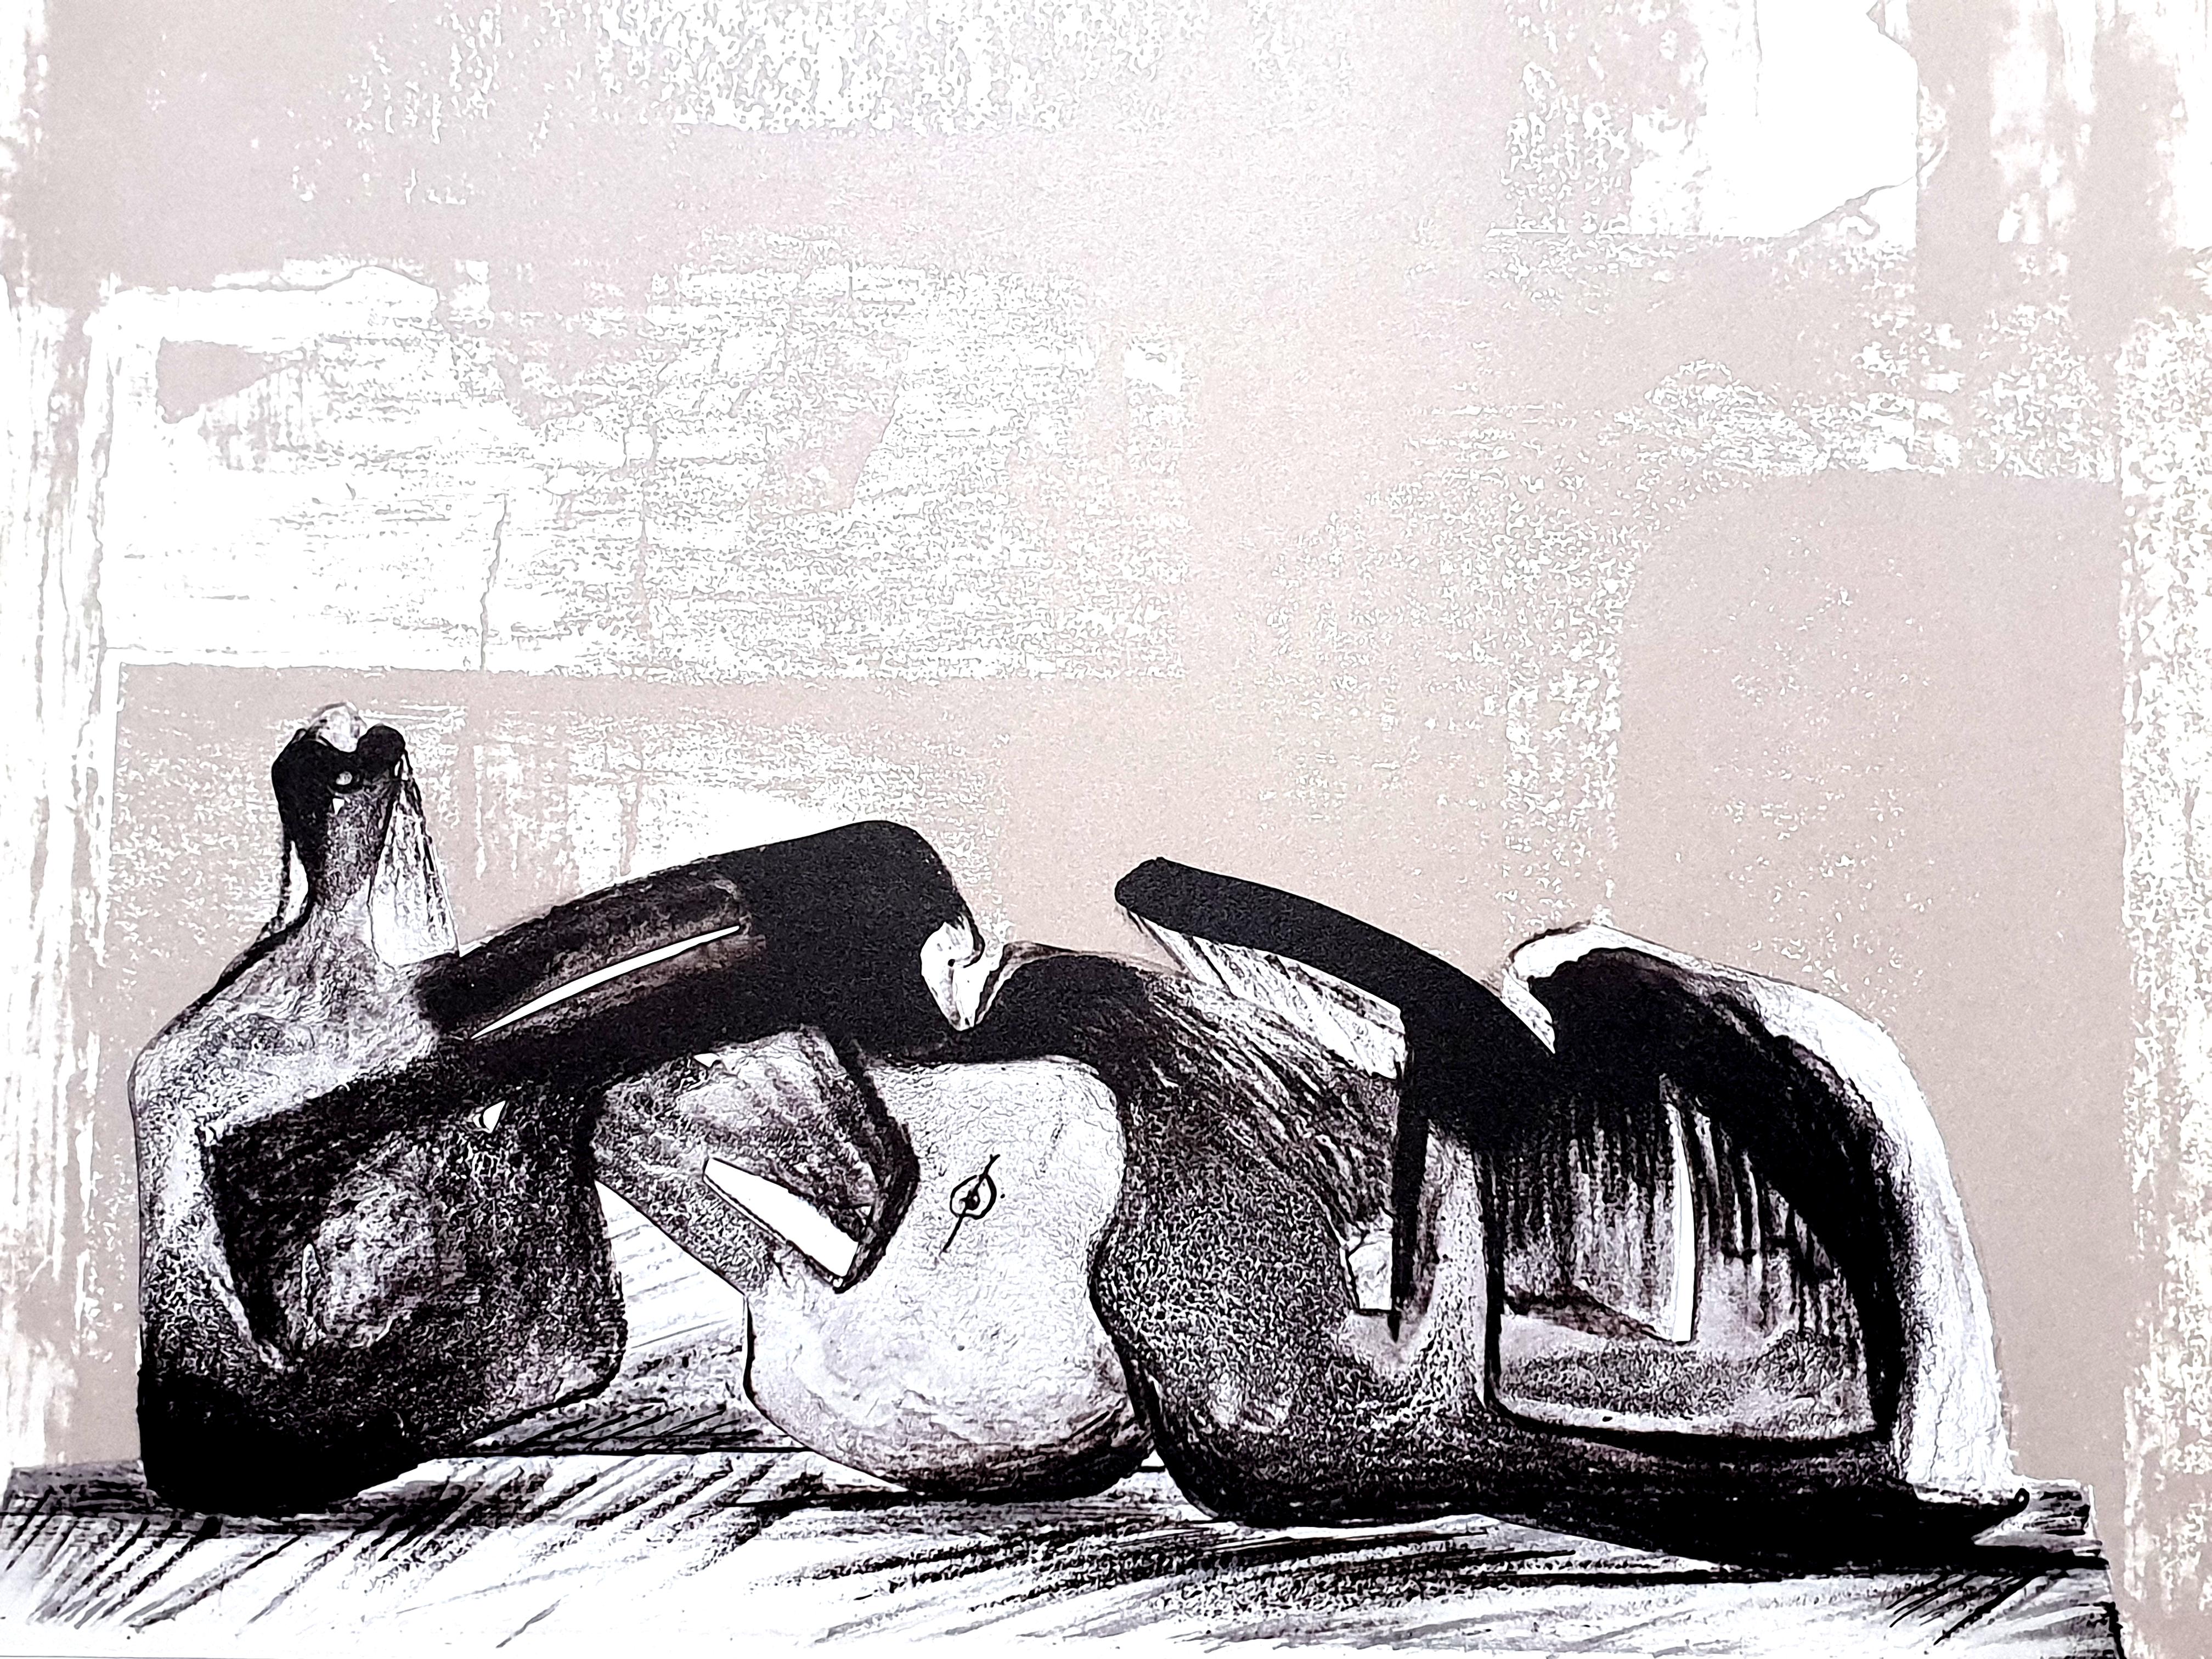 Henry Moore -  Original Lithograph